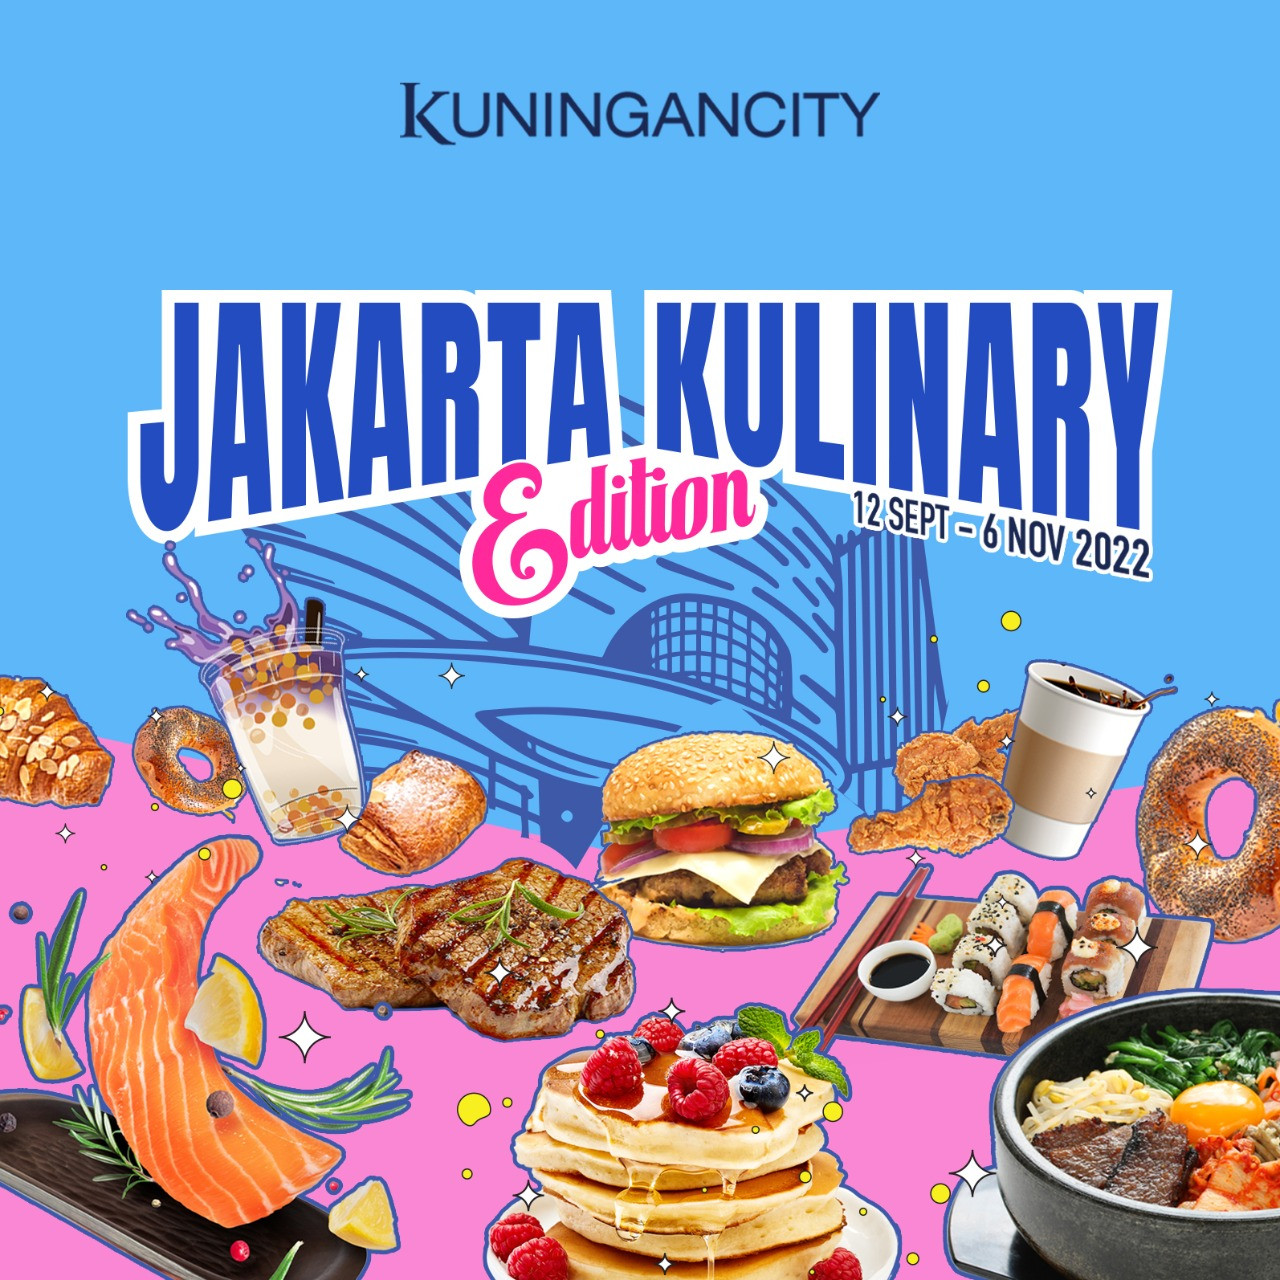 Kuliner Indonesia Hingga Mancanegara, Kuningan City Hadirkan "Jakarta Kulinary Edition"